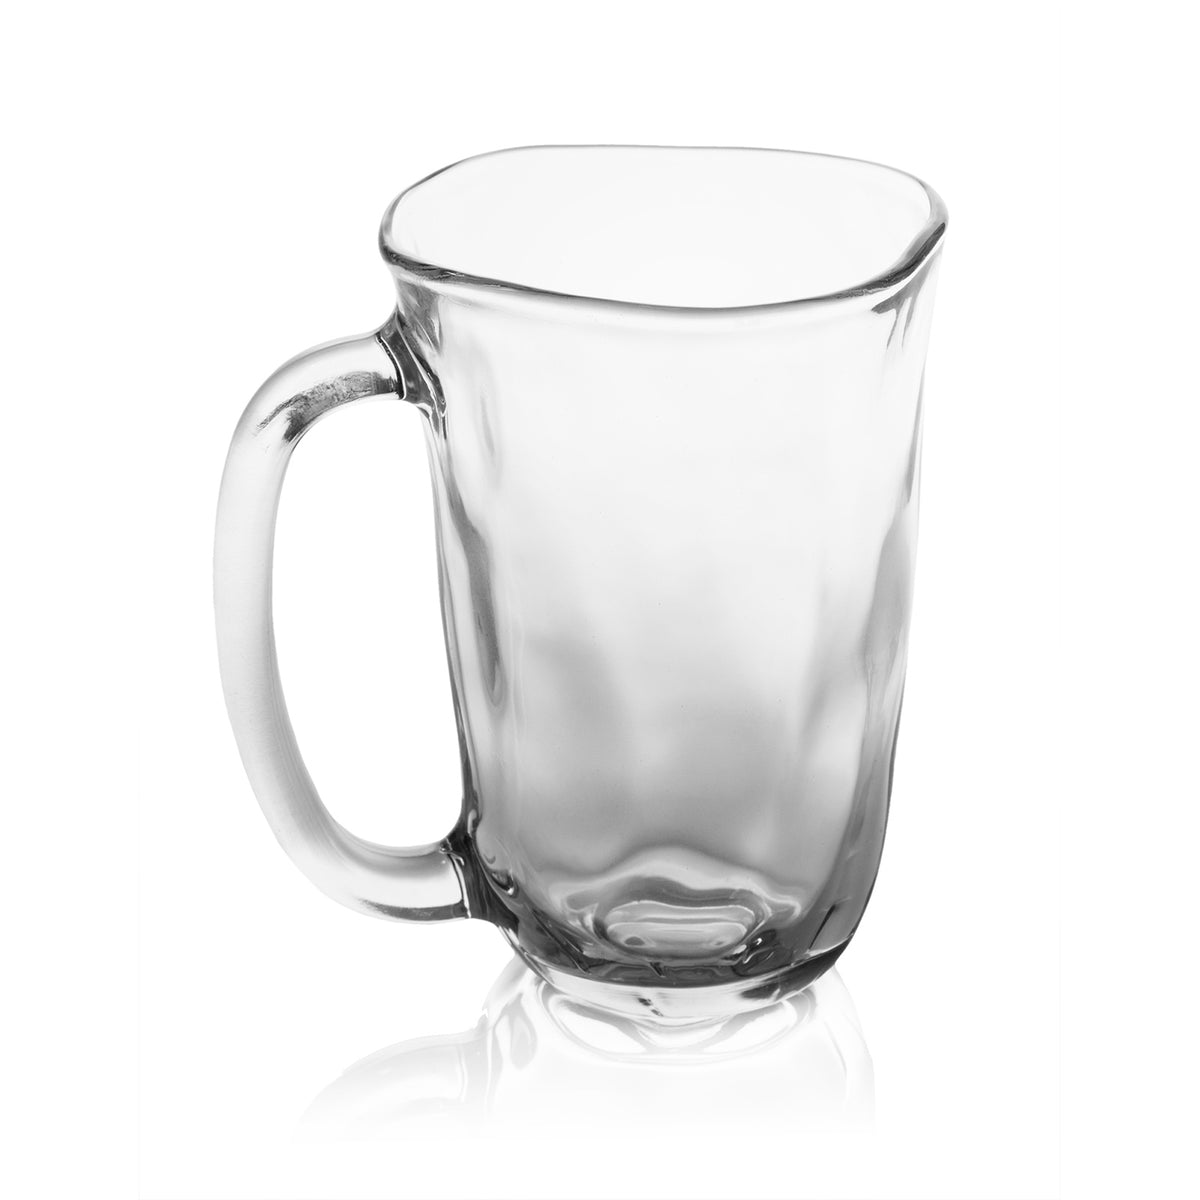 Red Co. Original Footed Clear Glass Irish Coffee Mug, Set of 6 - 7.75 Ounce